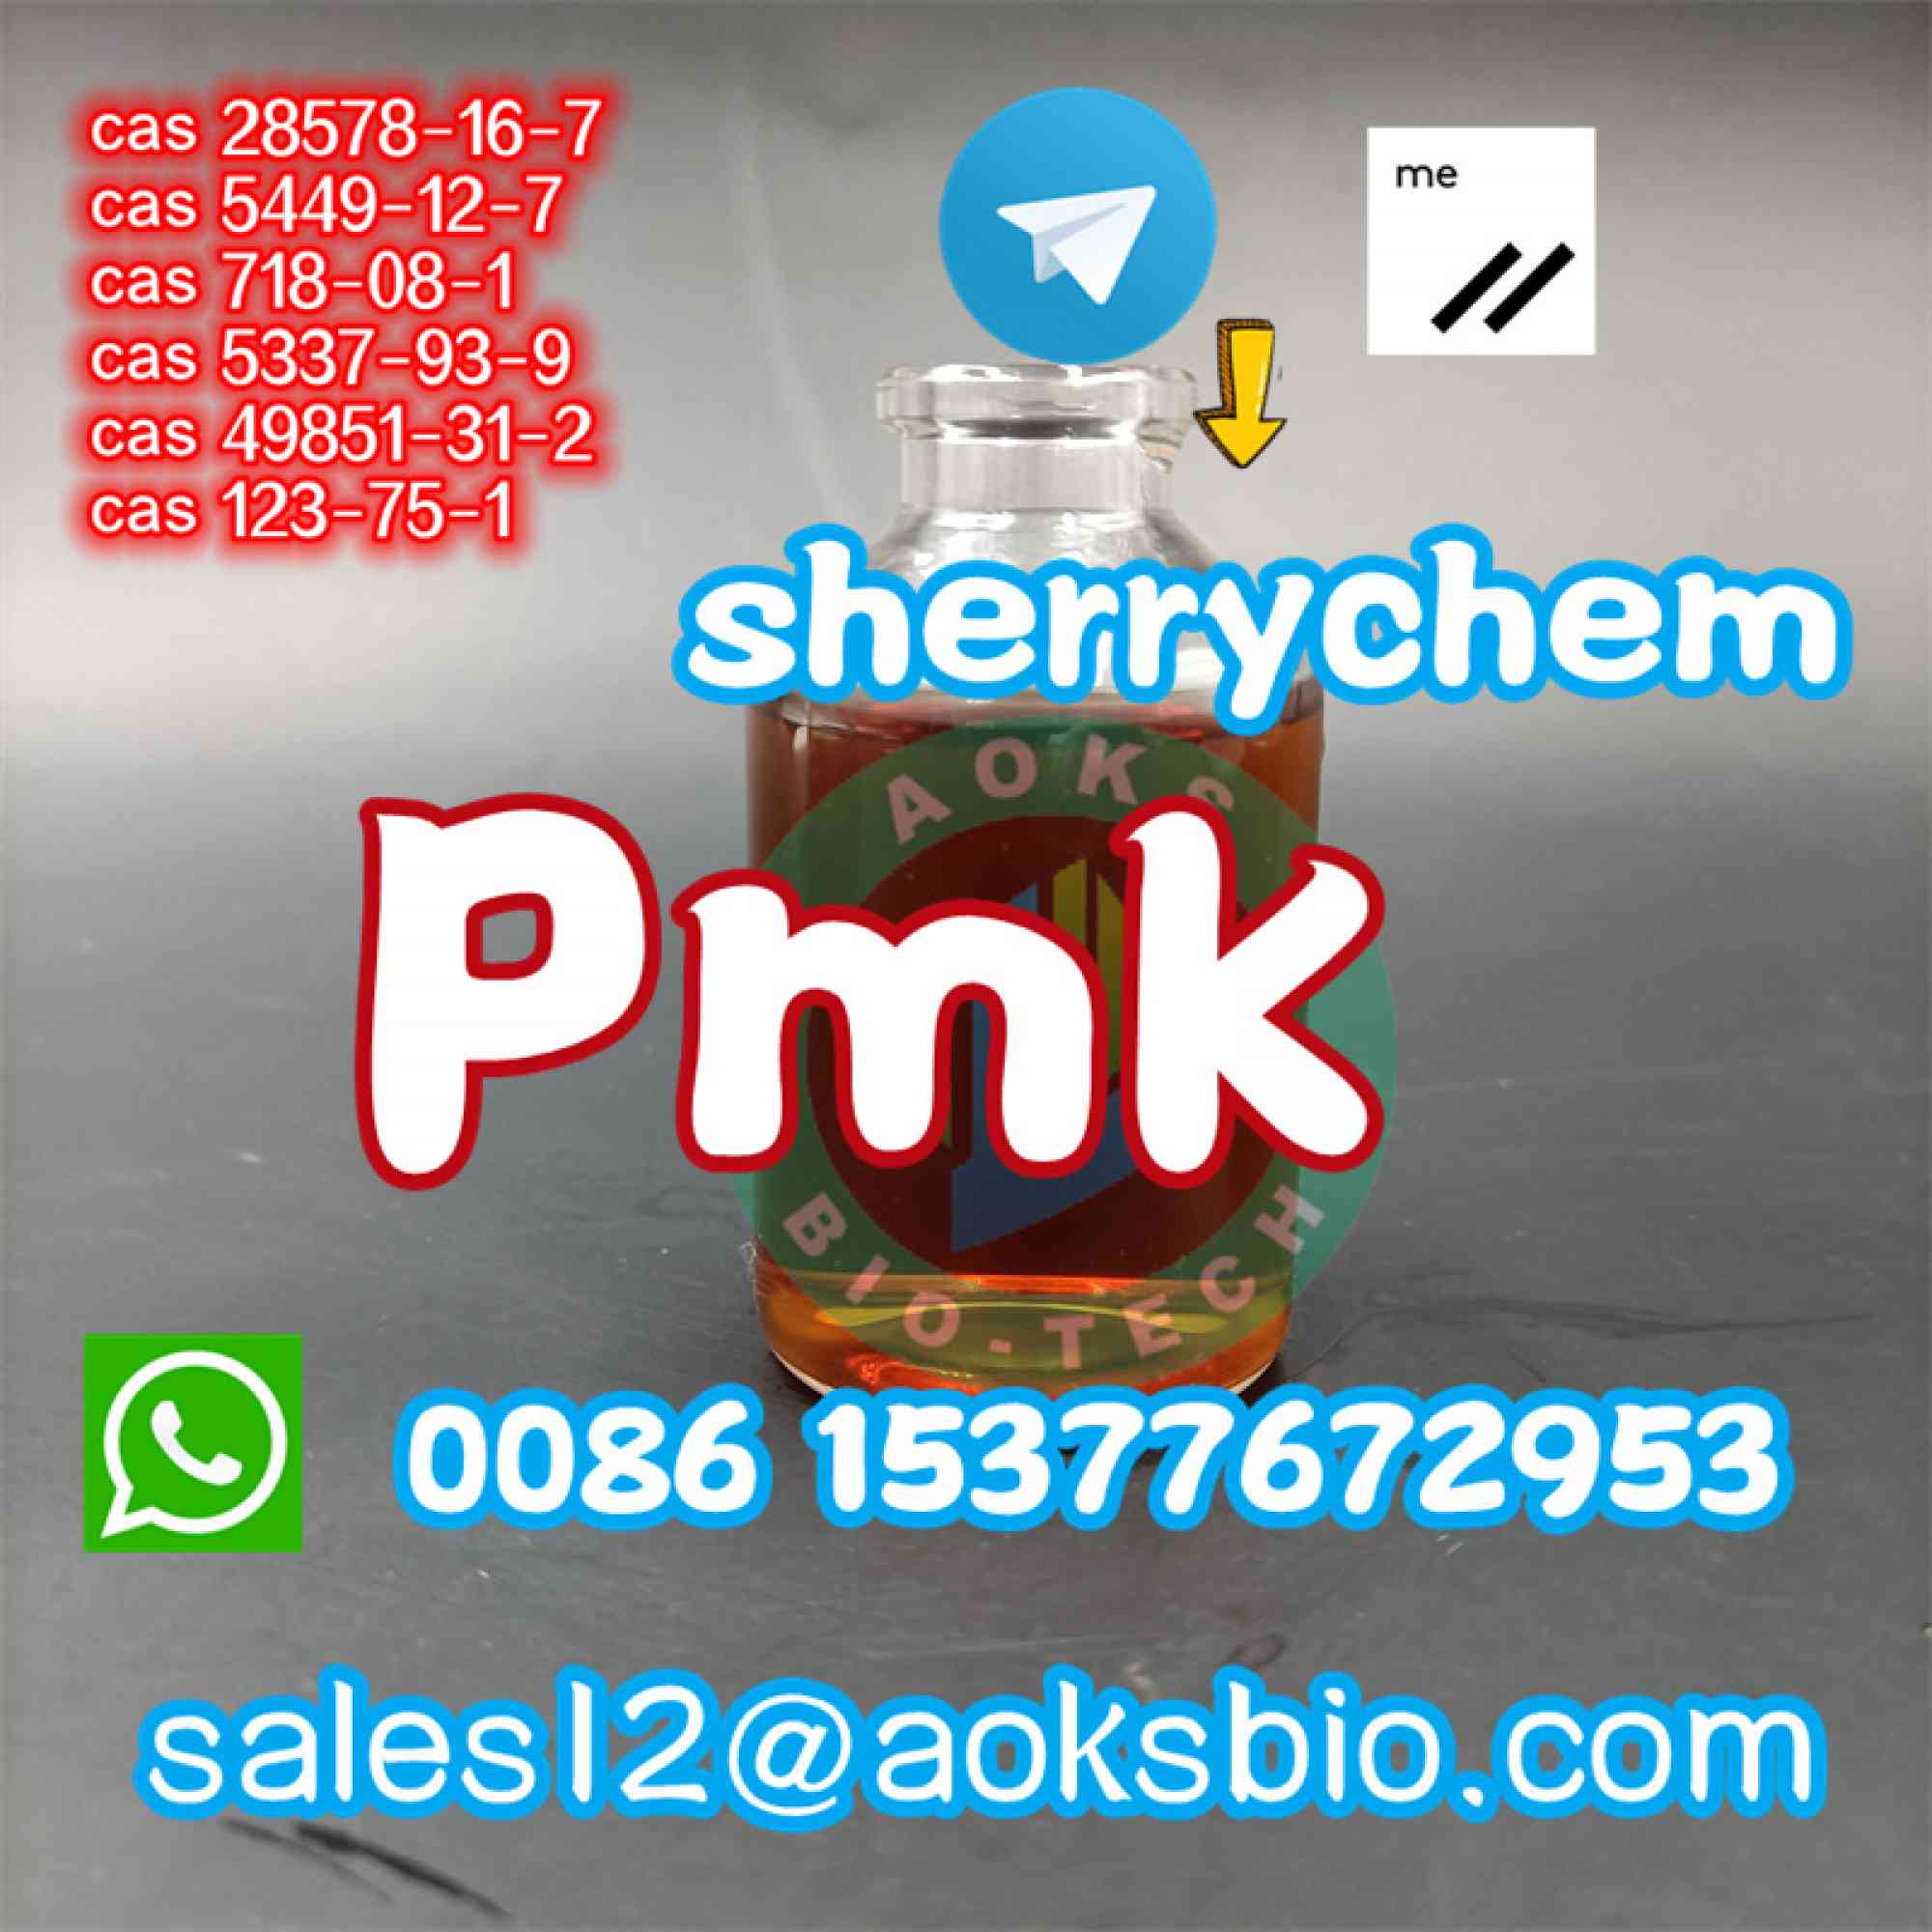 cas 28578-16-7 pmk glycidate, pmk oil,  en venta